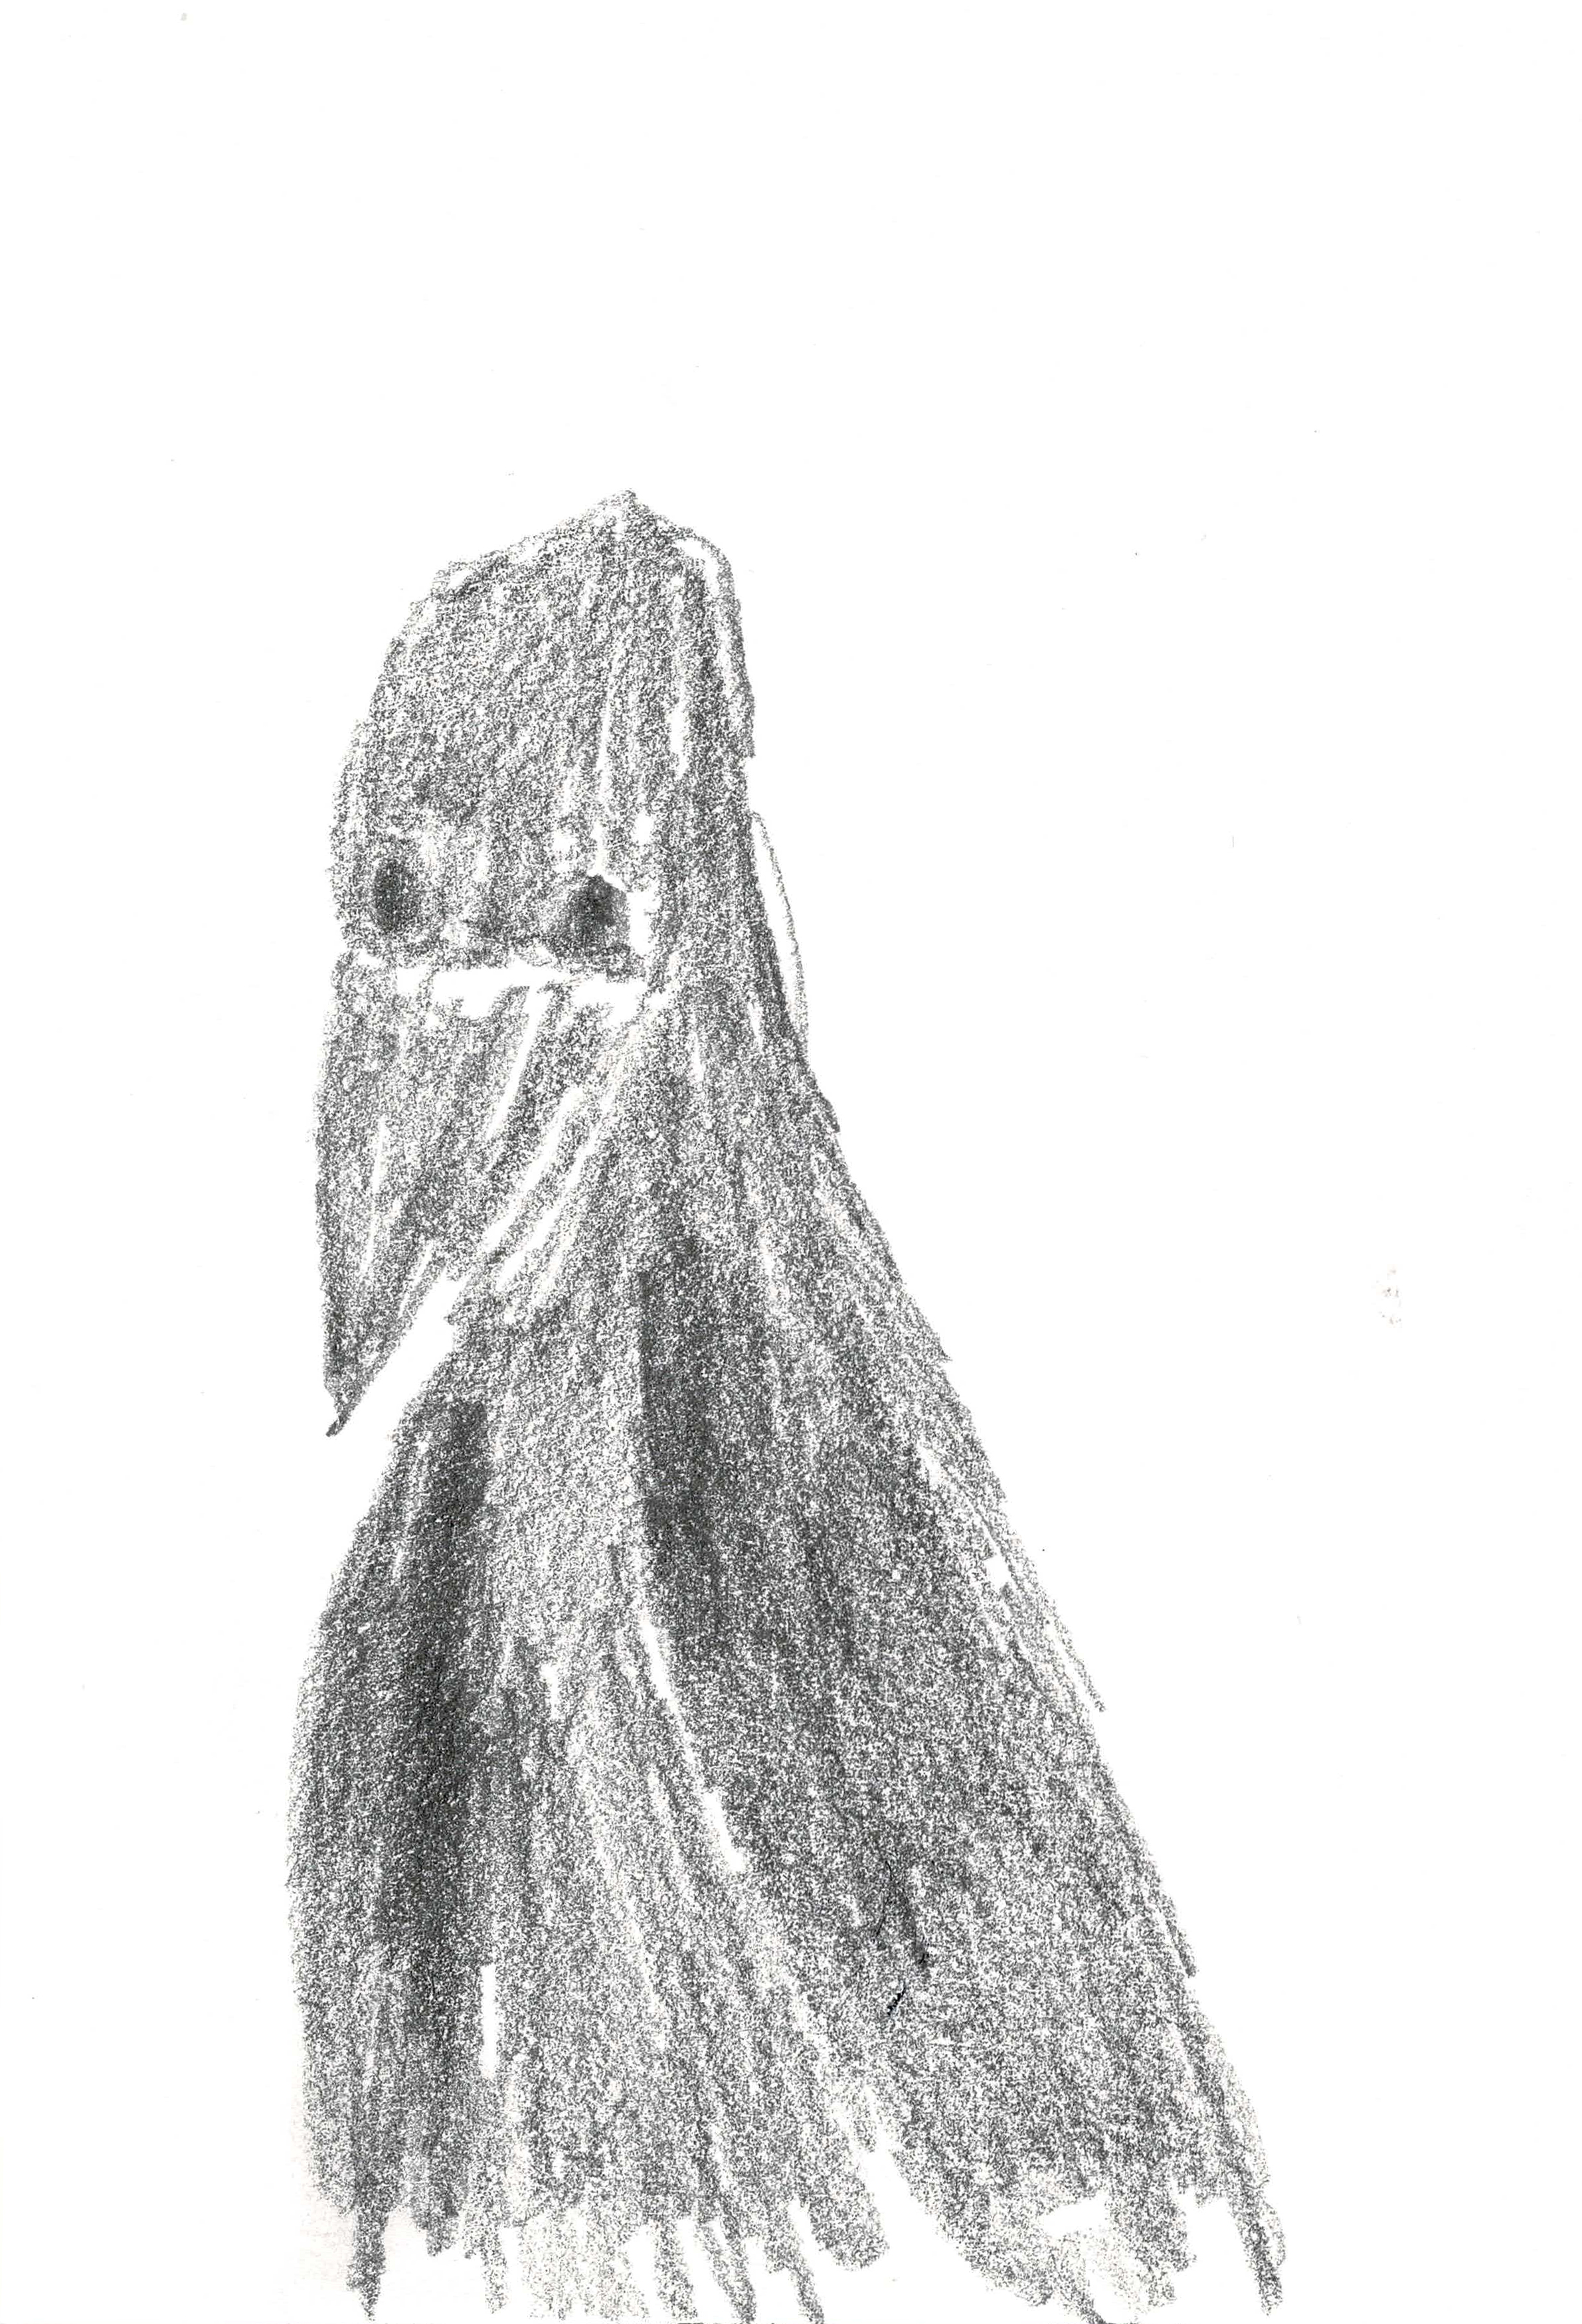 pencil drawing of a pigeon's upper half